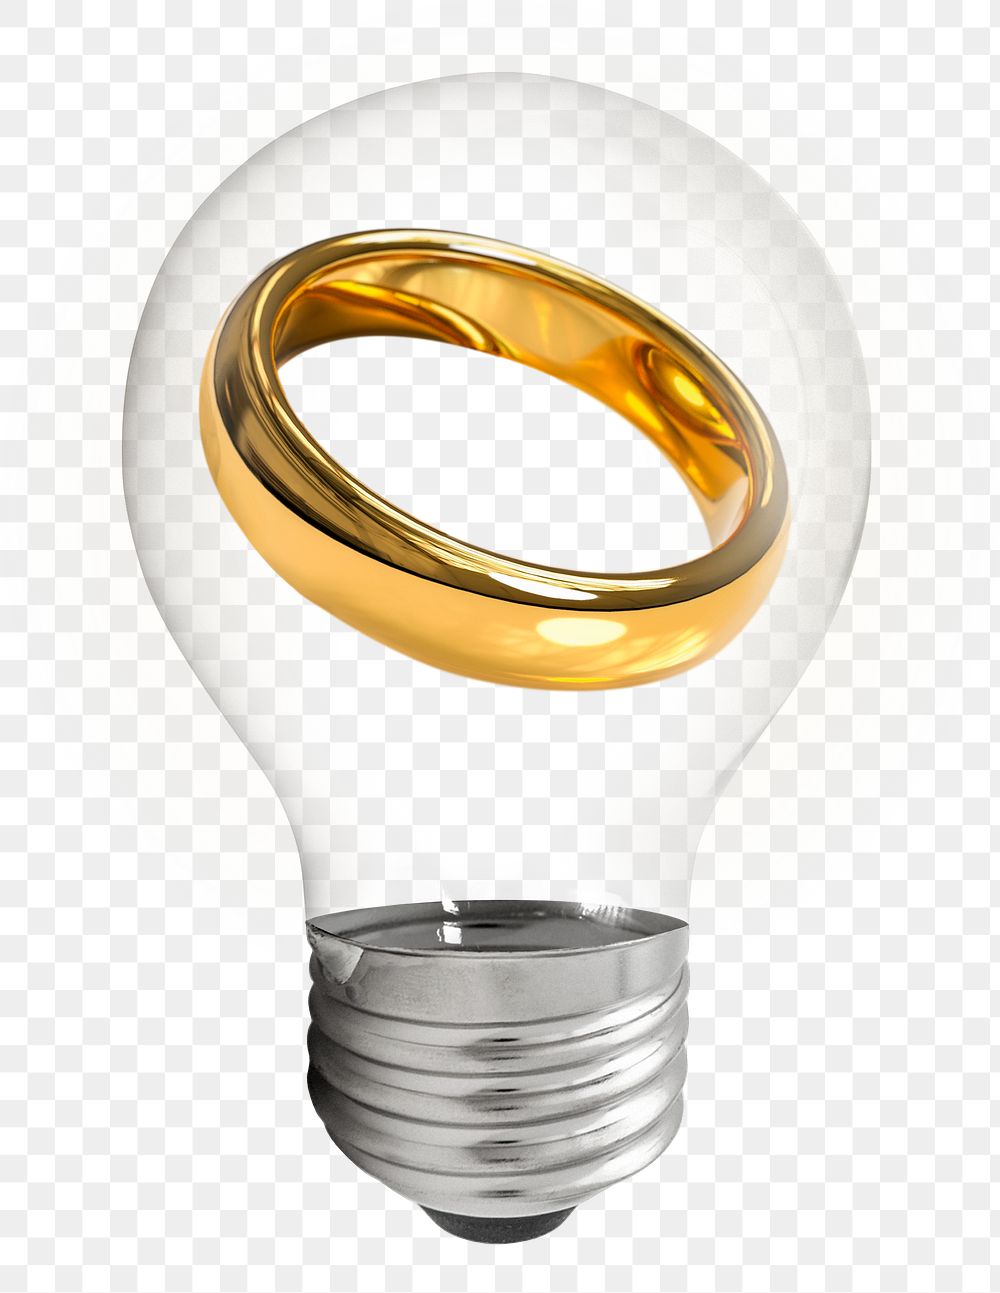 Png gold wedding ring sticker, light bulb creative remix on transparent background